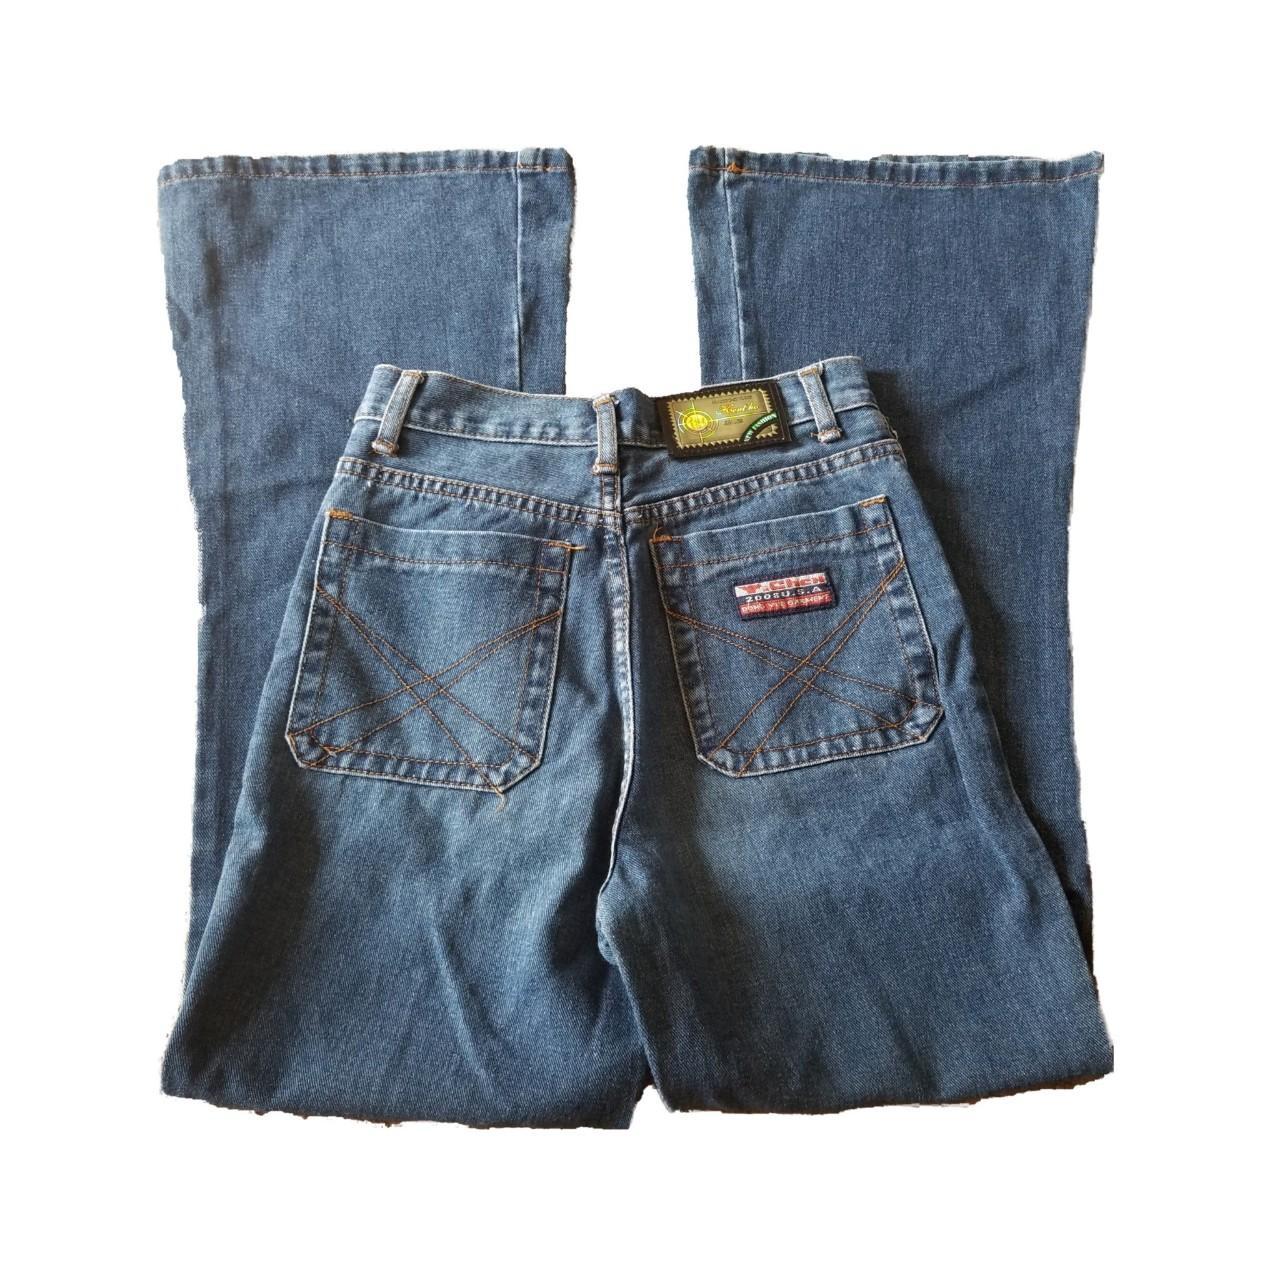 Vintage high waisted flare jeans 🦋. Size 26 but fits... - Depop